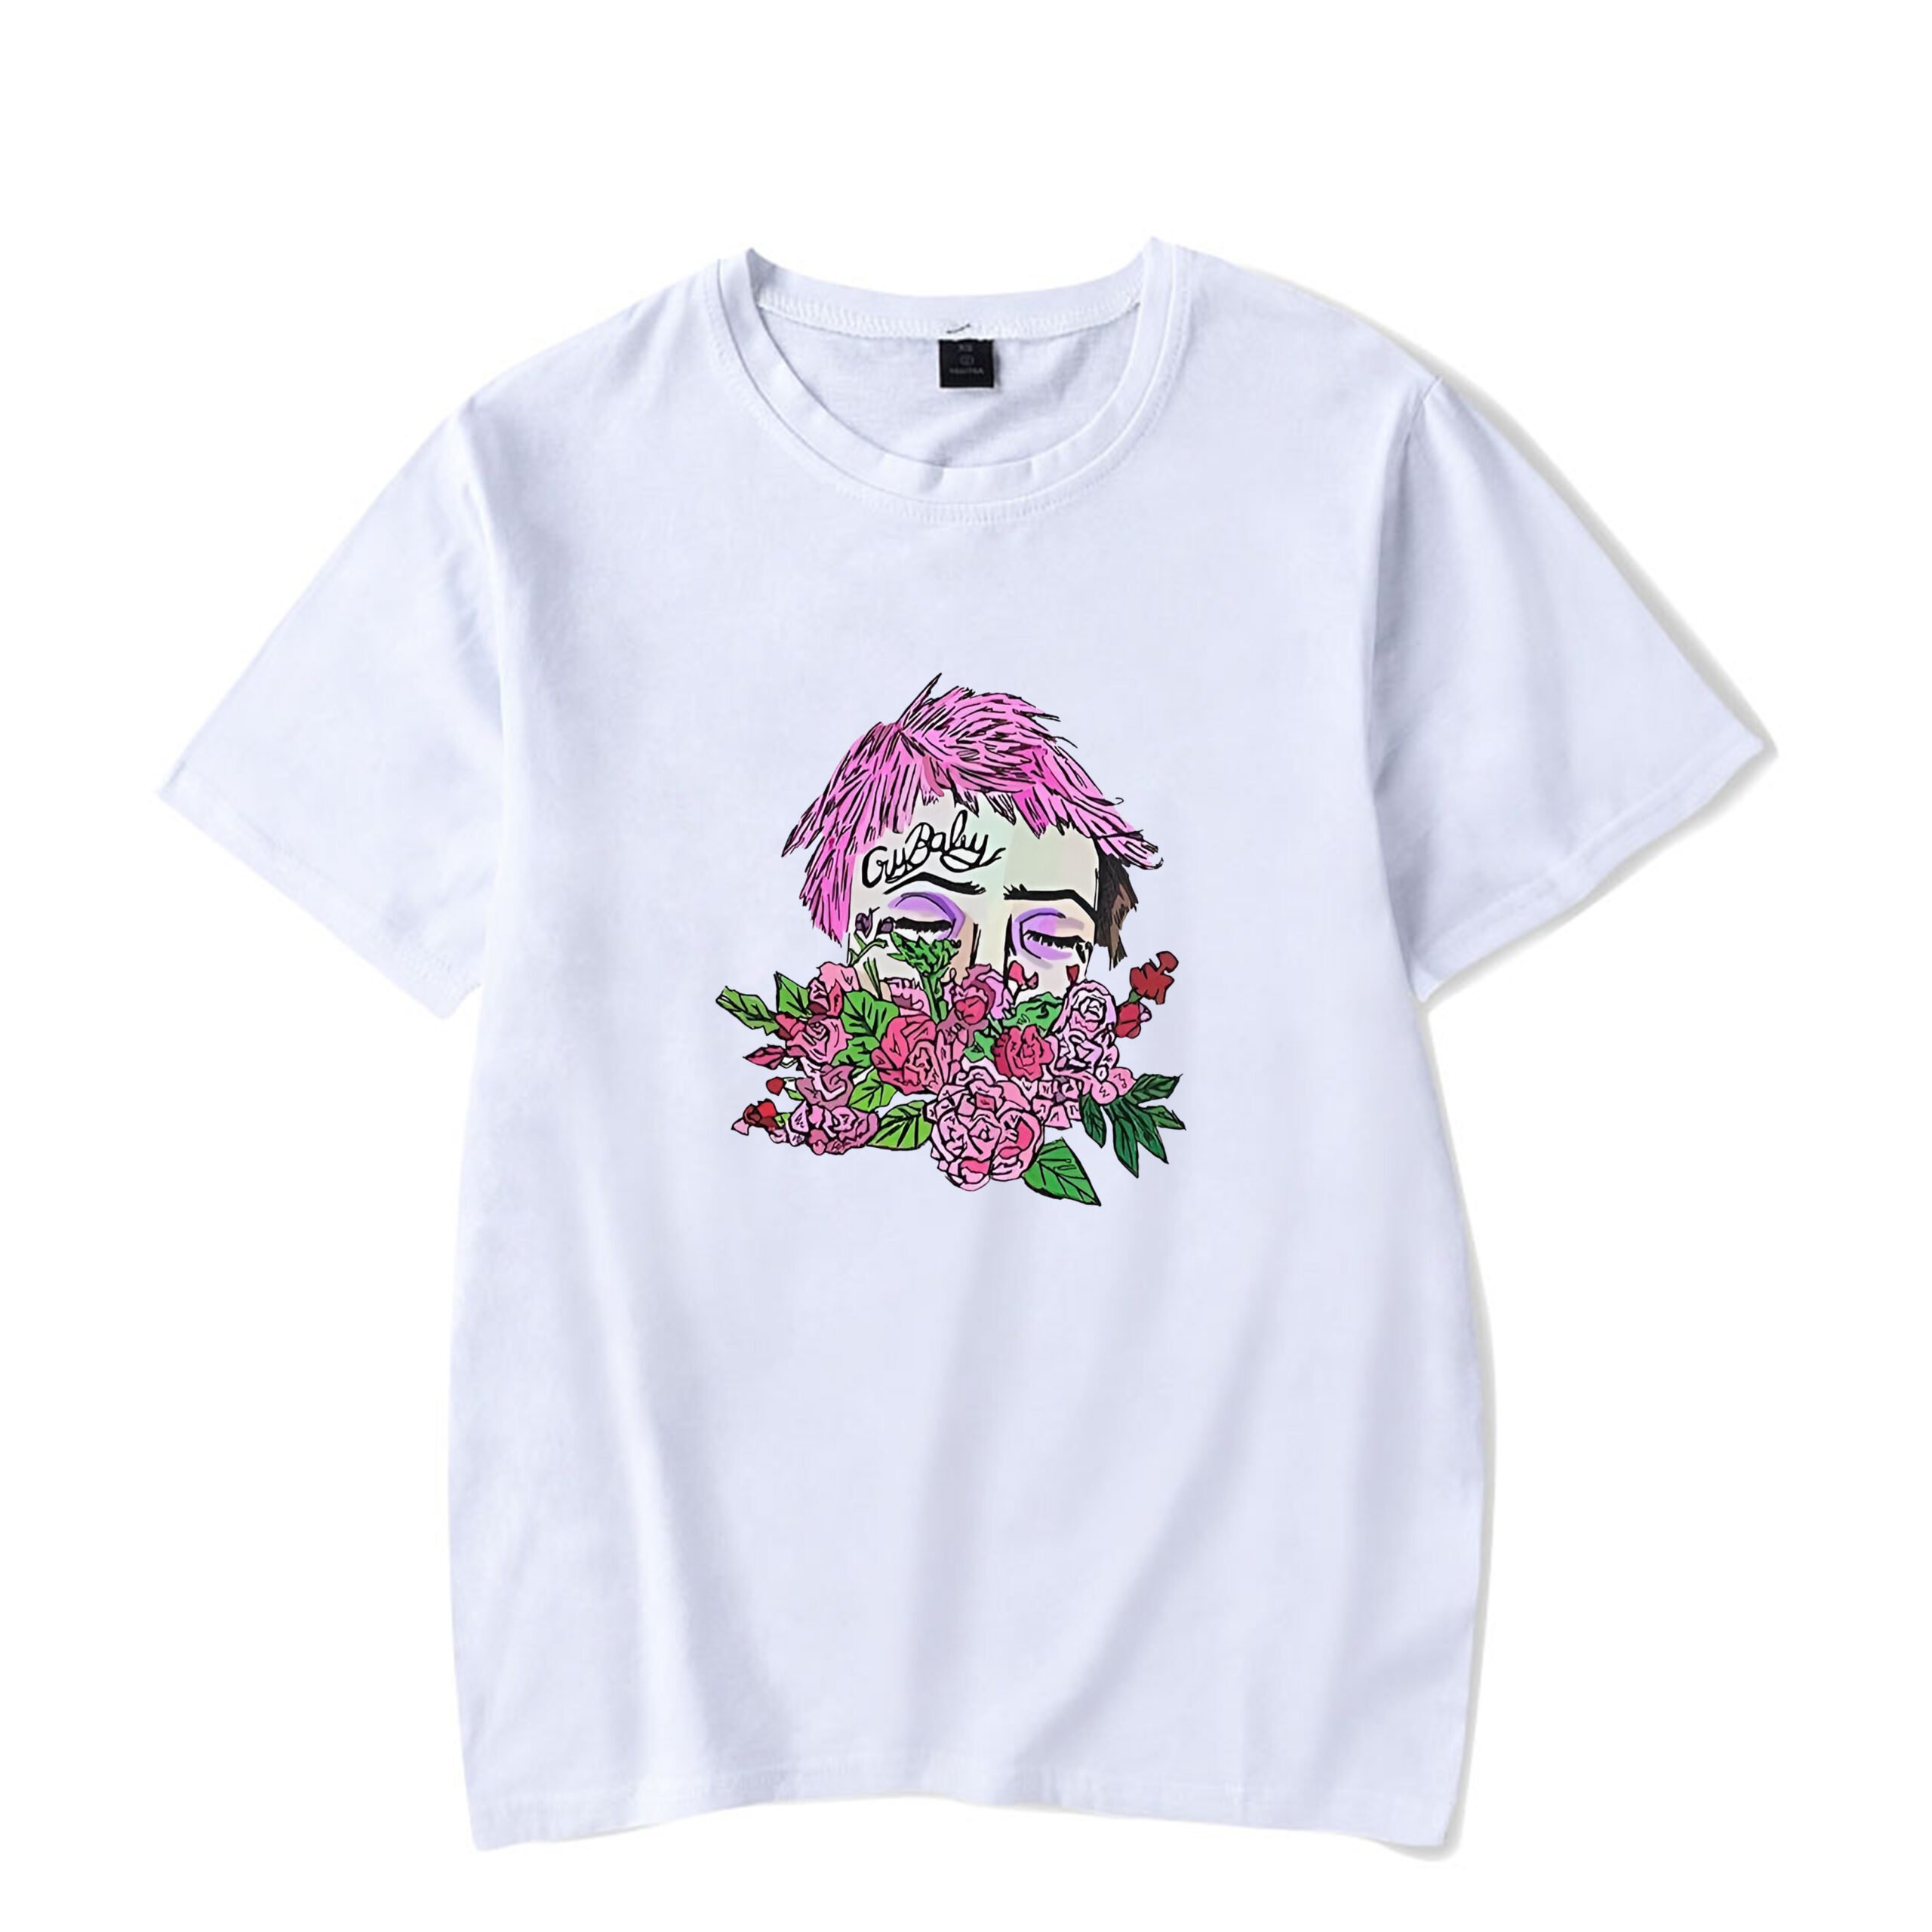 roses t shirt 7192 - Purpled Shop